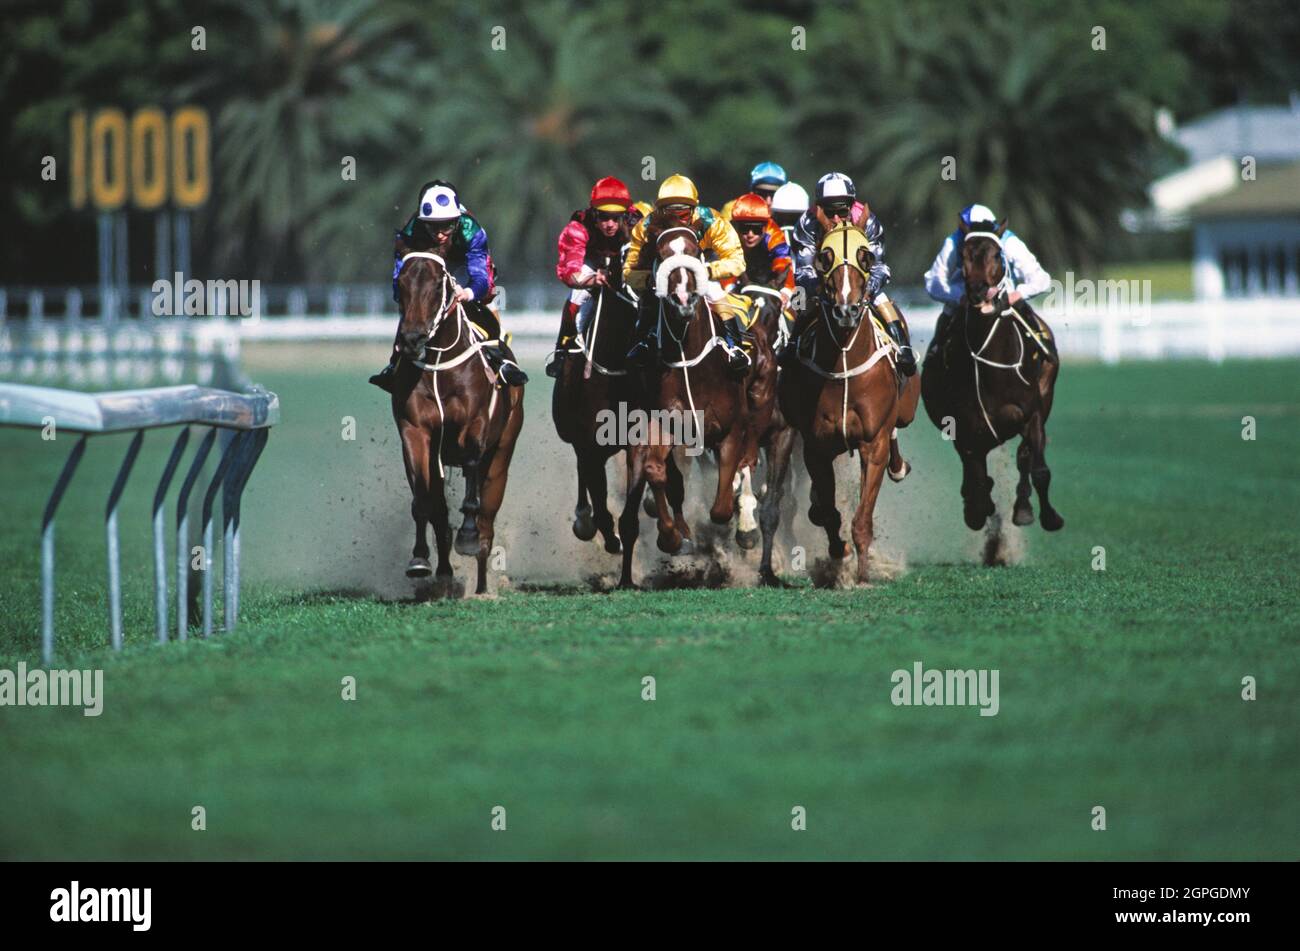 Australia. Sport. Horse racing on turf. Stock Photo